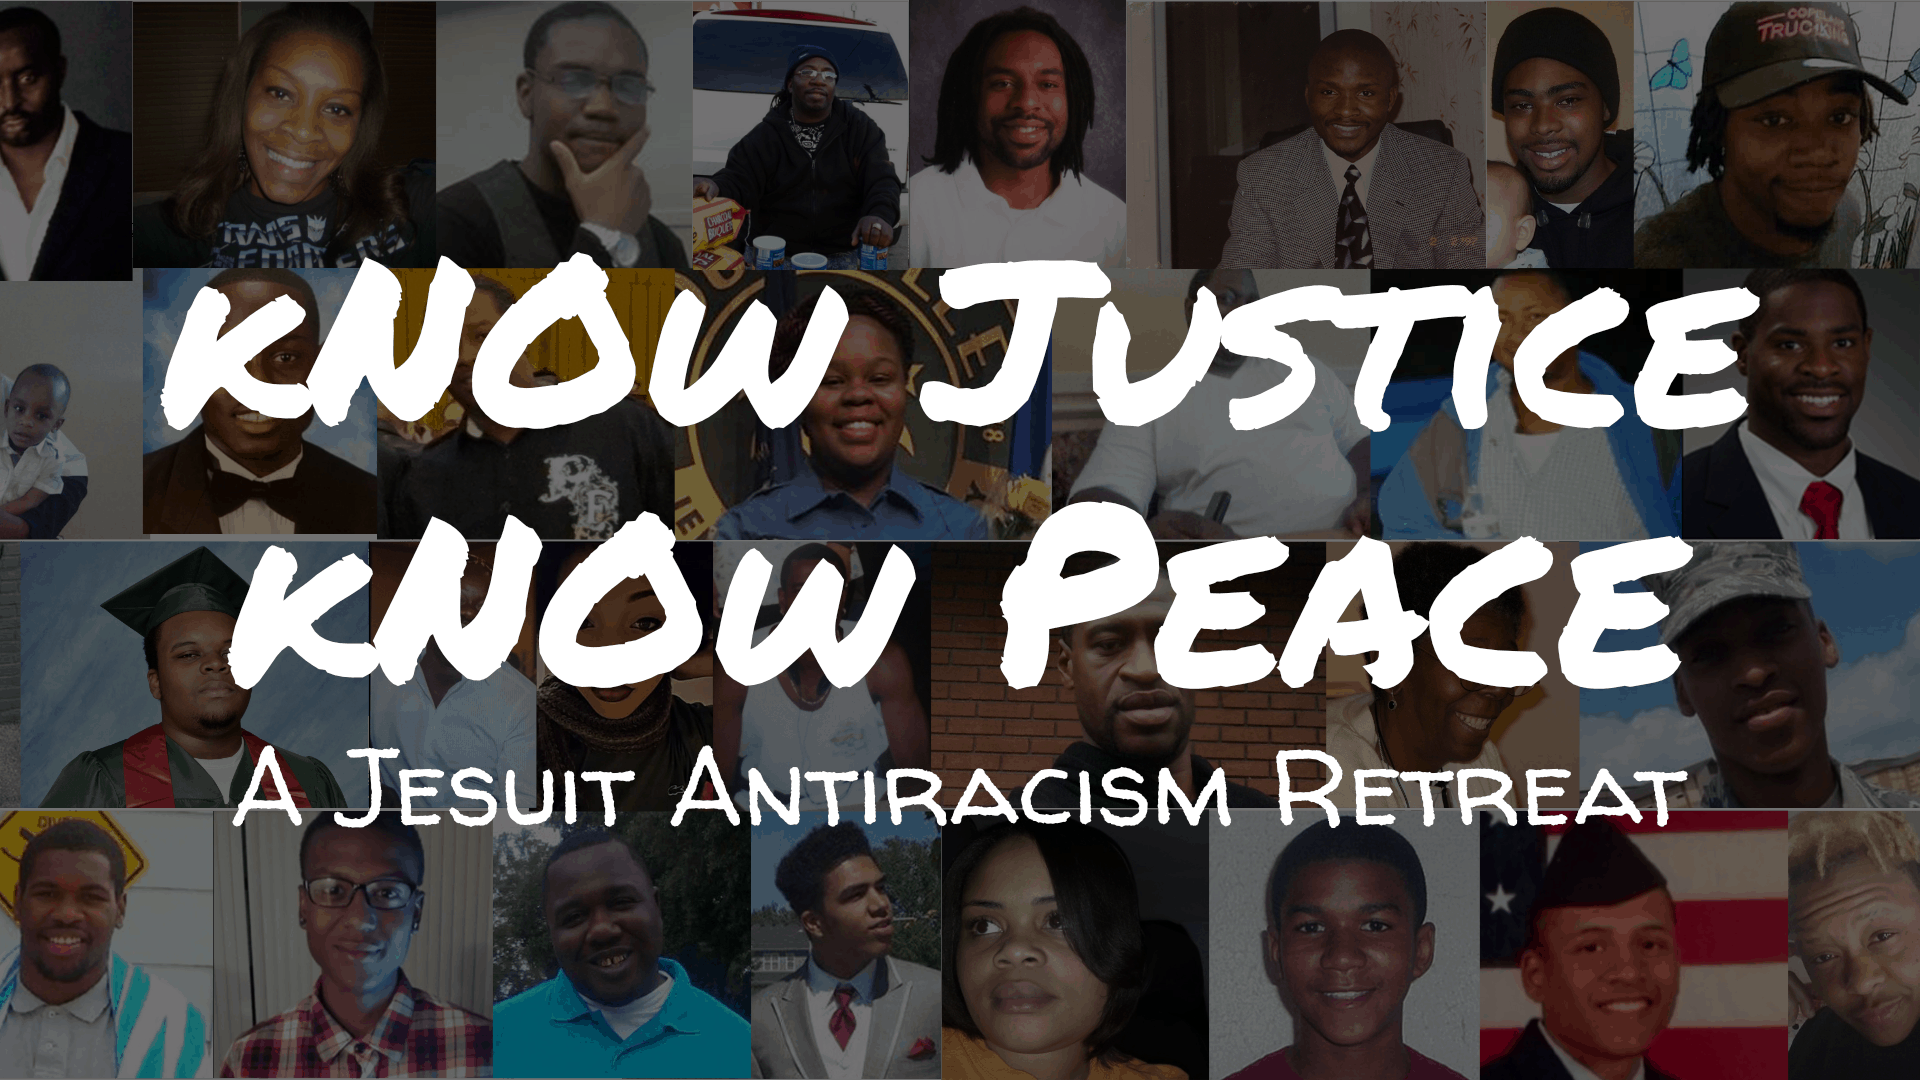 Know Justice, Know Peace: A Jesuit Antiracism Retreat